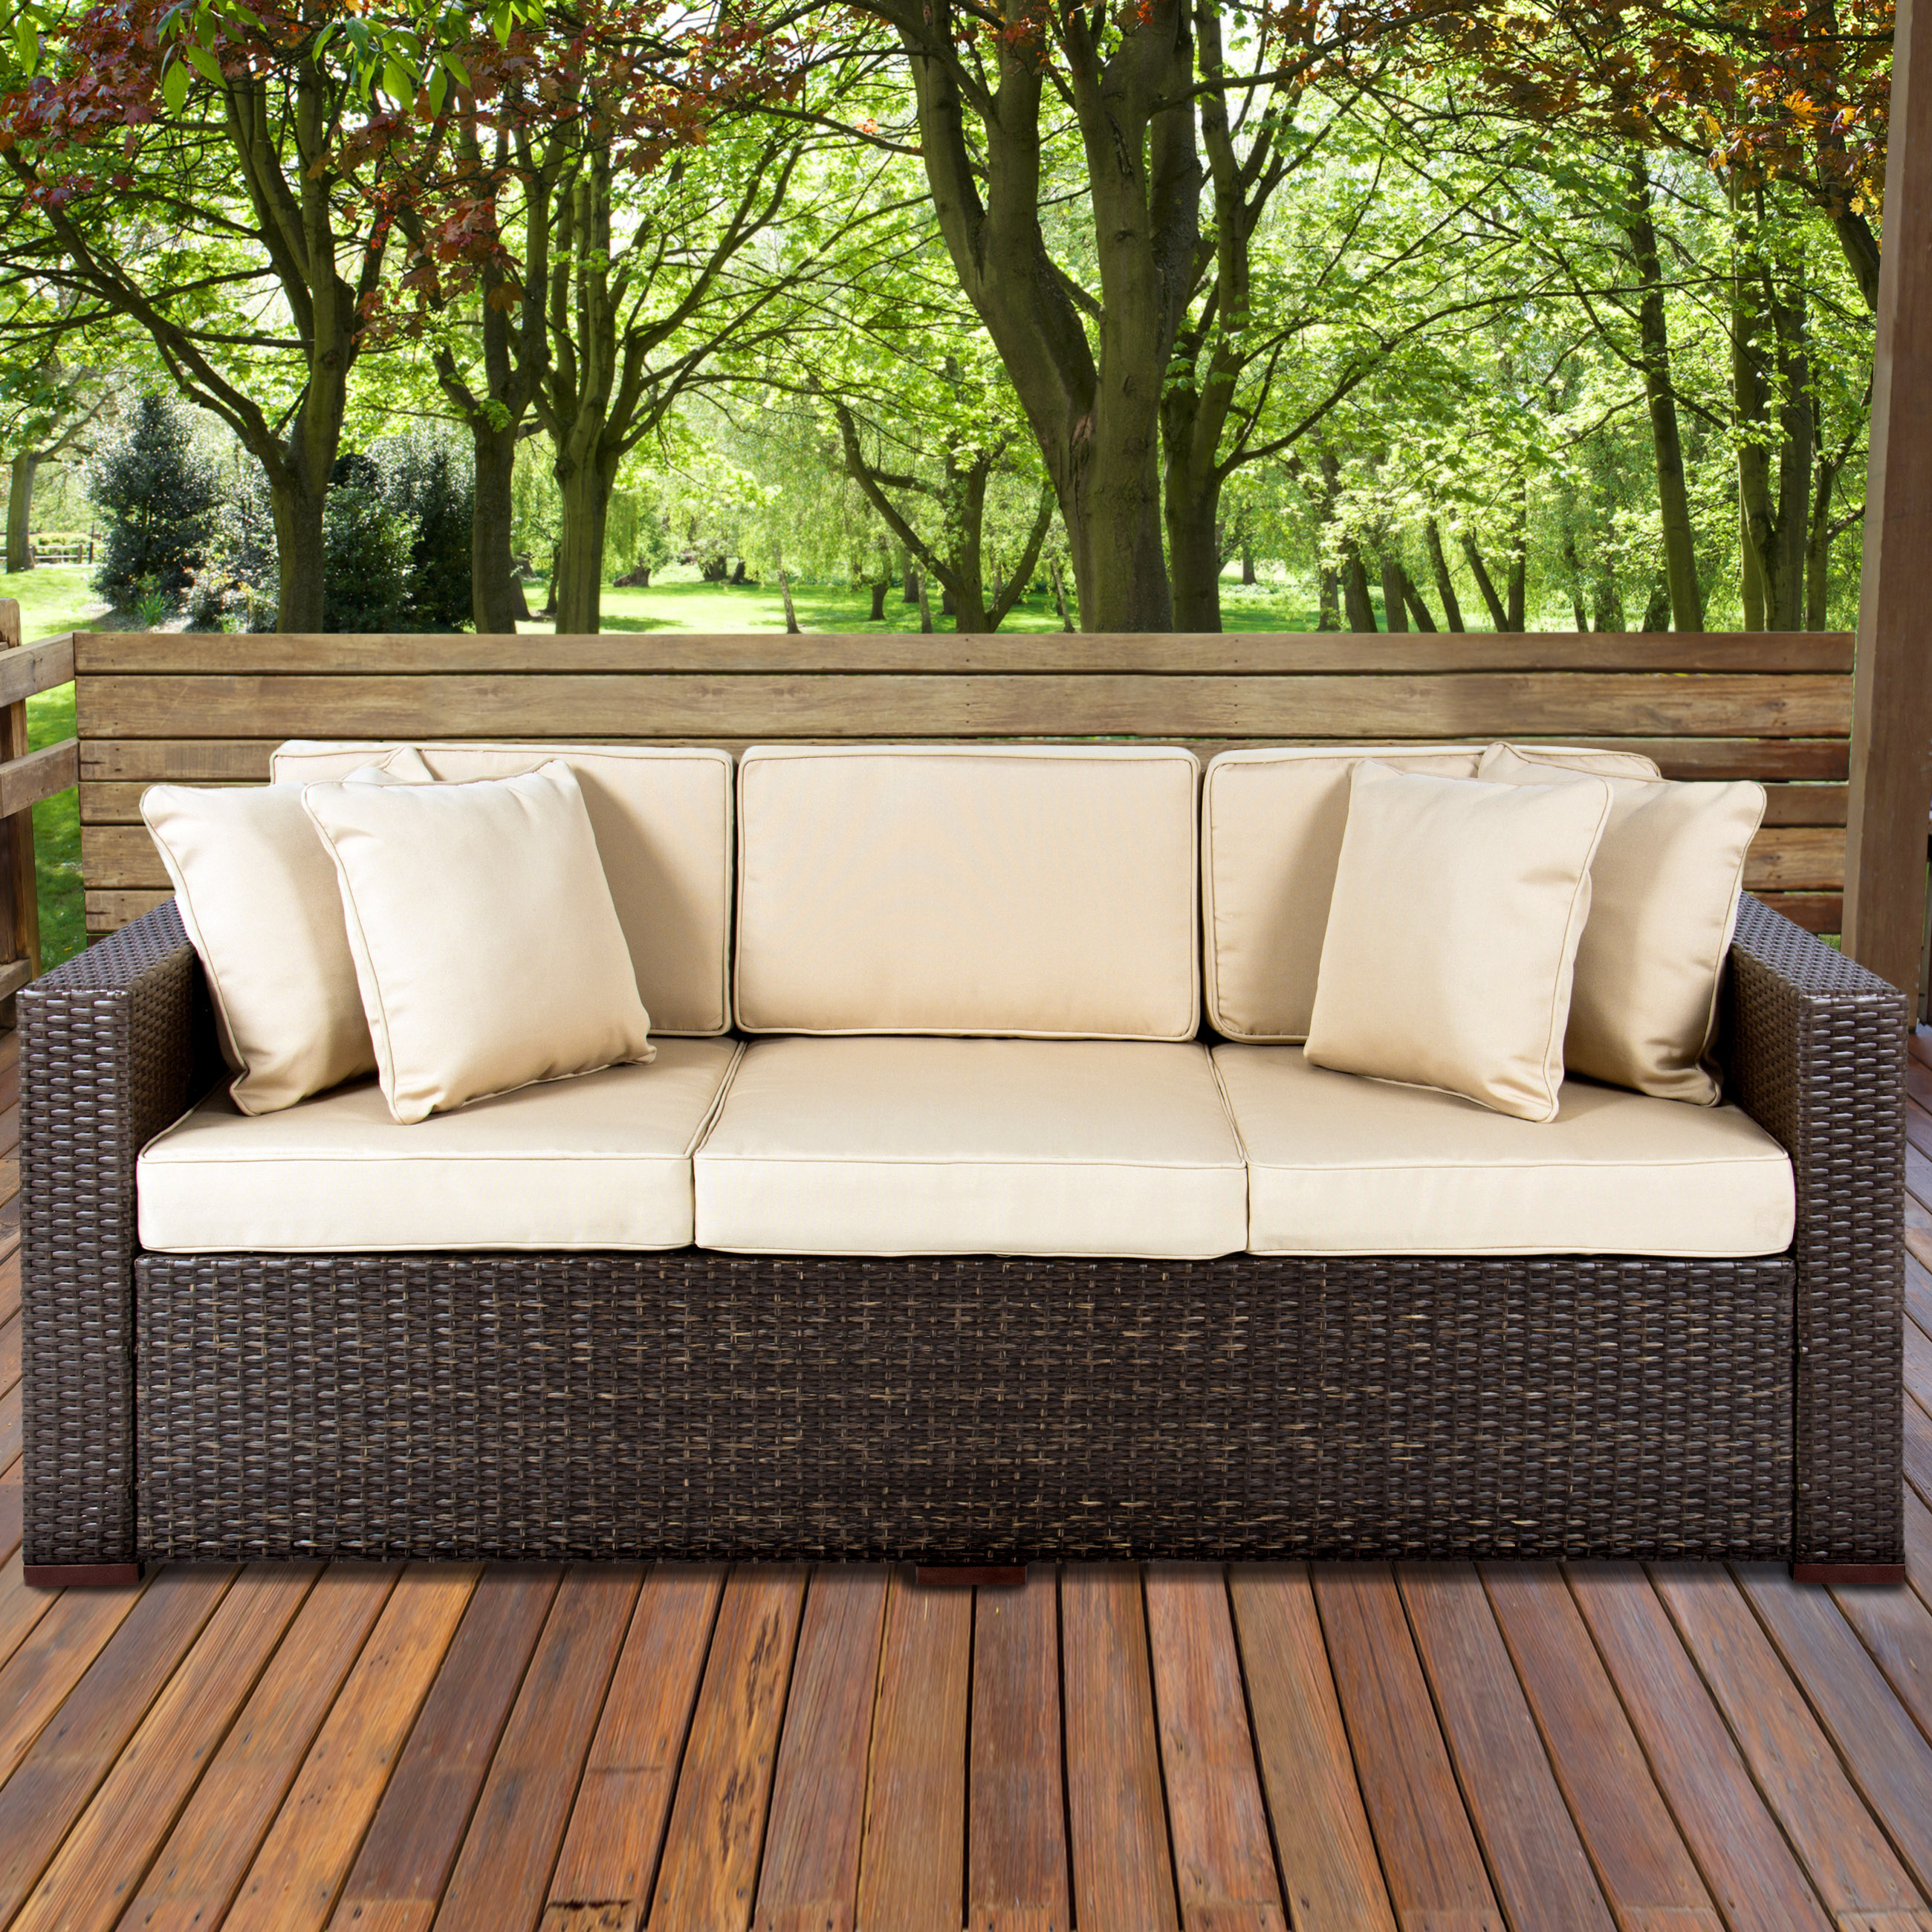 outdoor rattan sofa